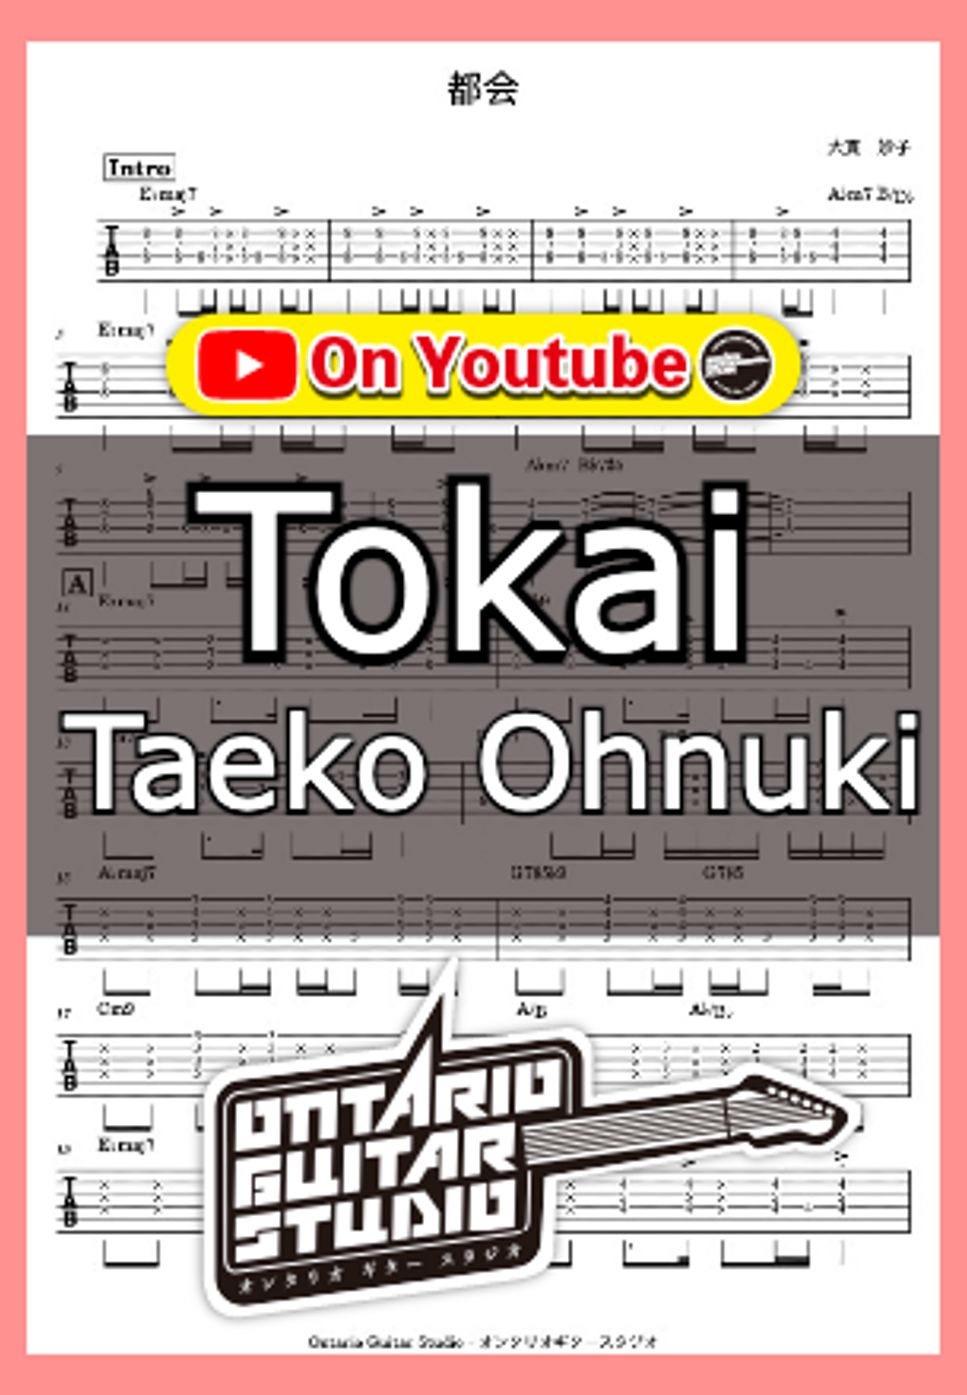 Taeko Ohnuki - Tokai by Ontario Guitar Studio